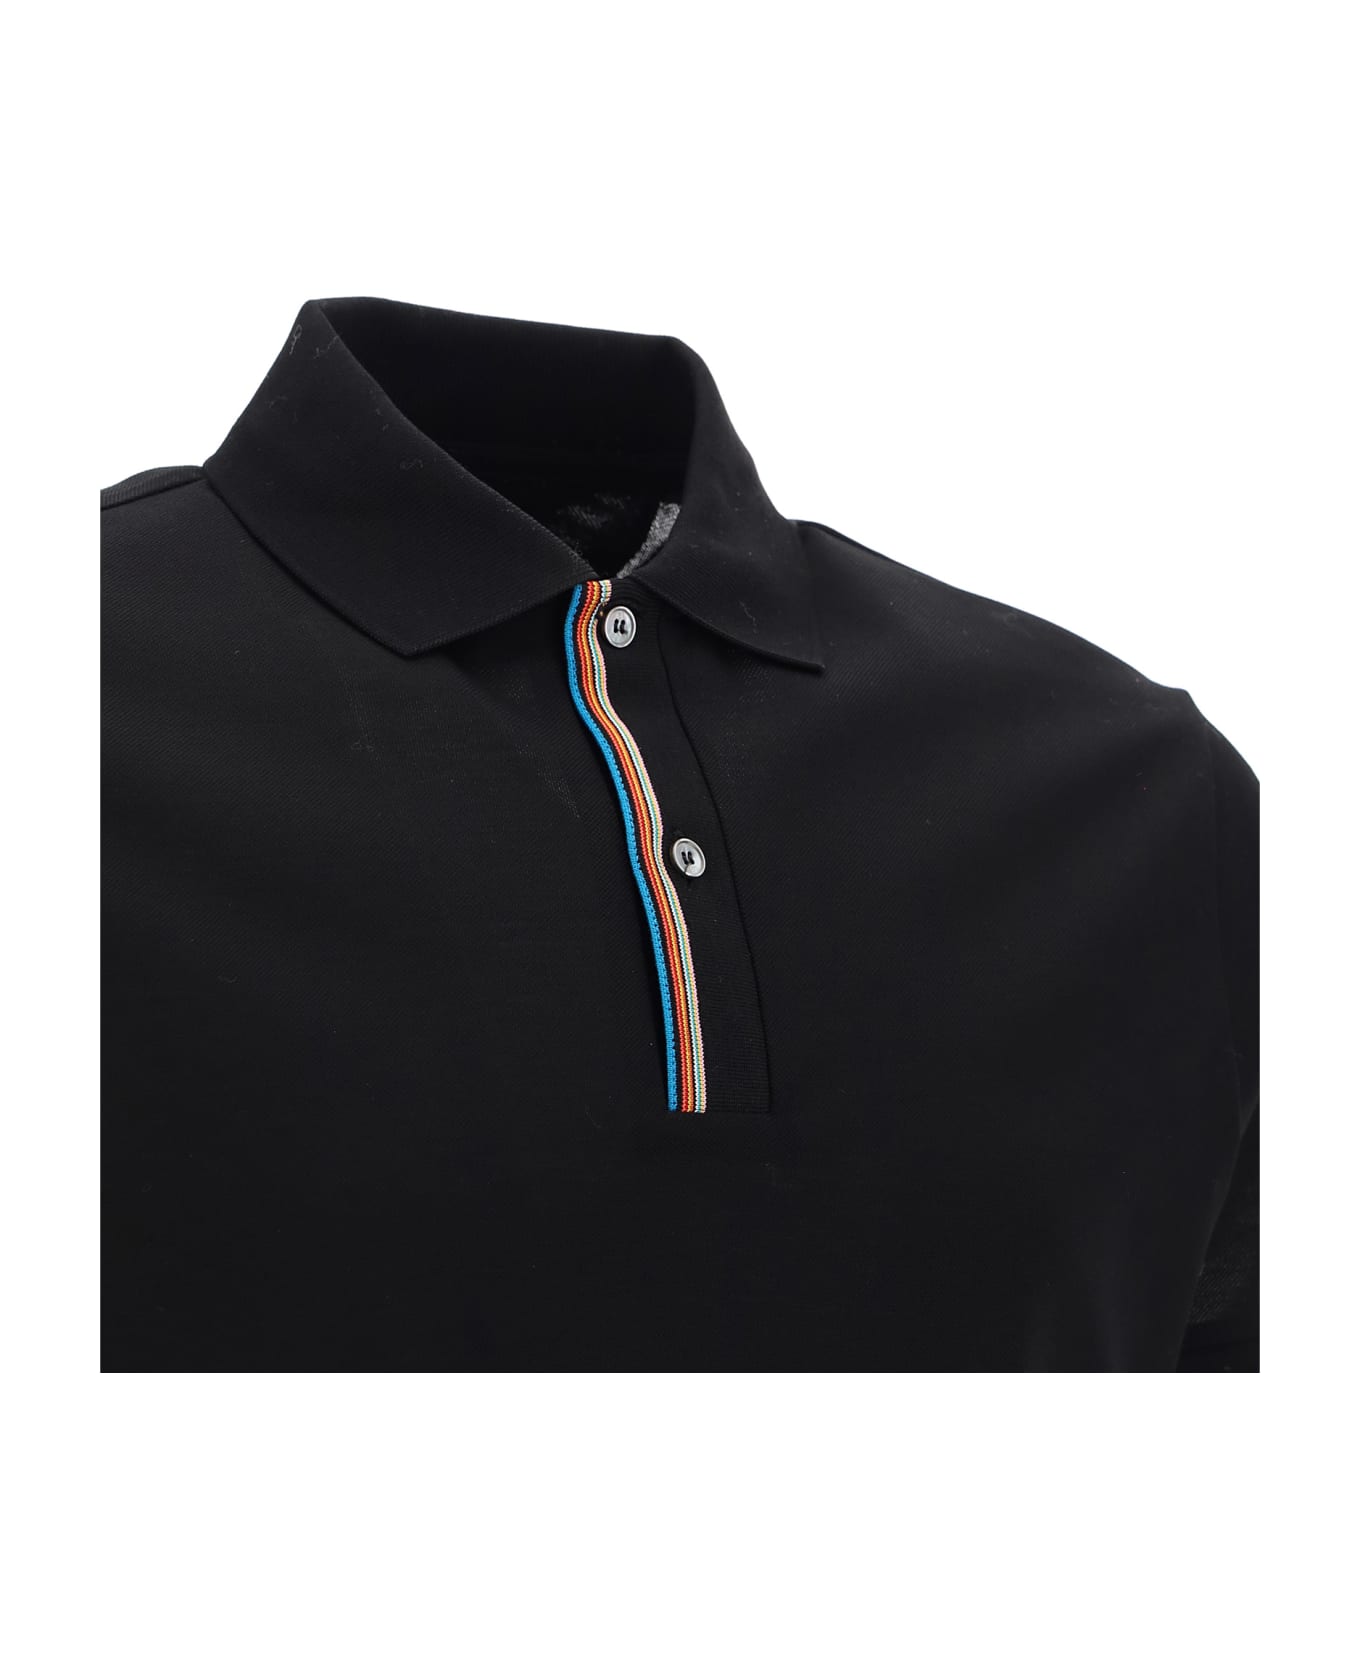 Paul Smith Gents Polo Shirt - Black